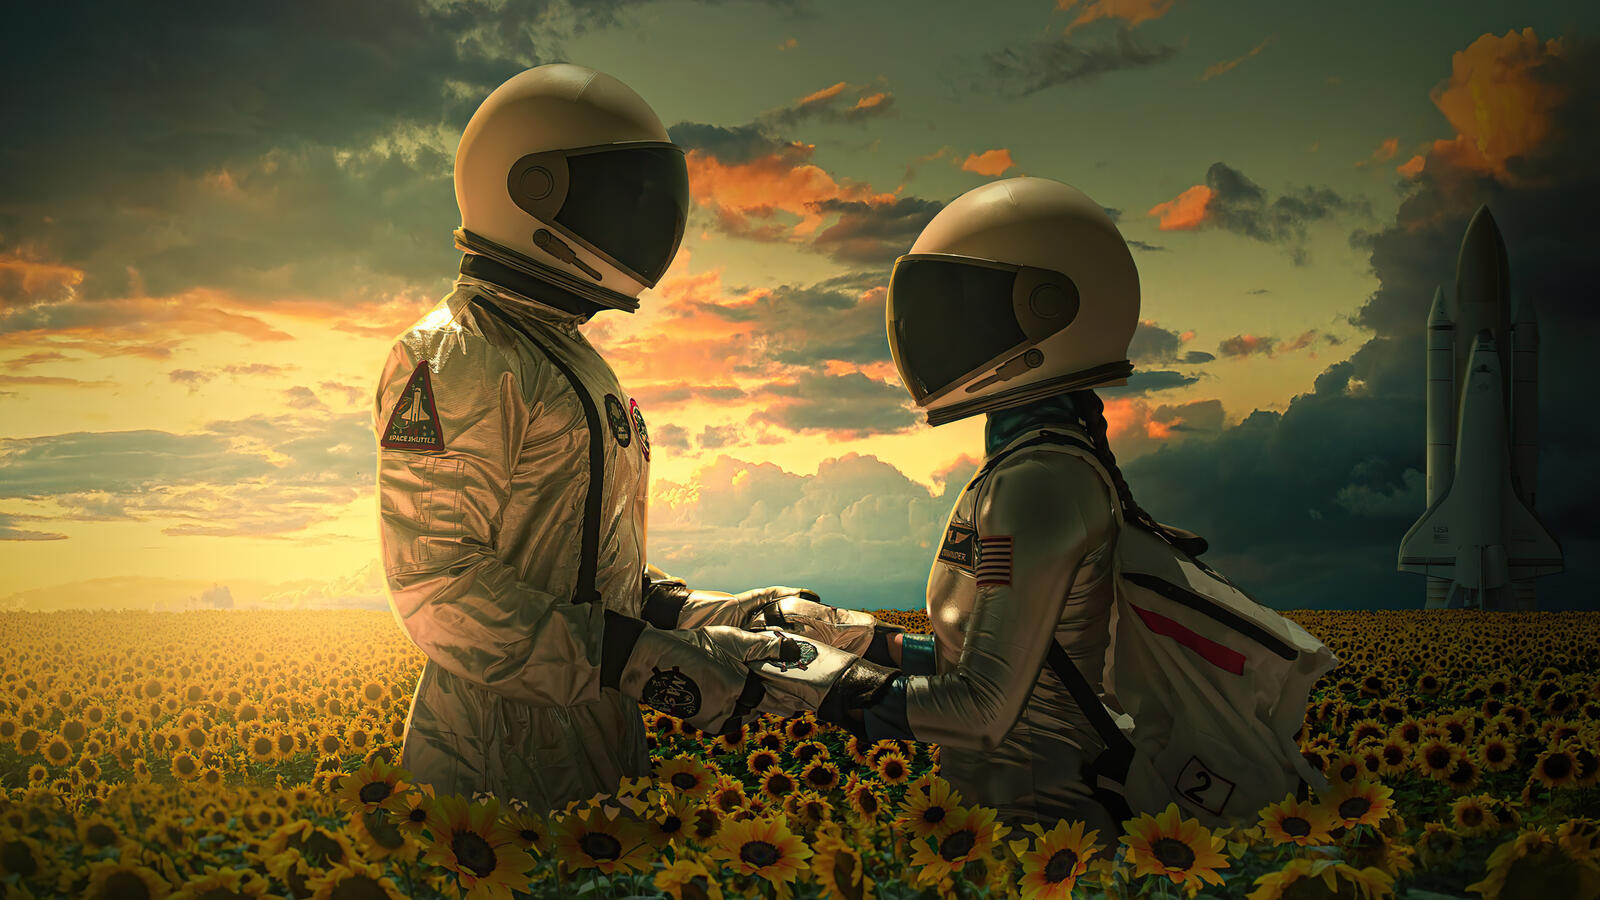 Wallpapers astronaut encounter field on the desktop